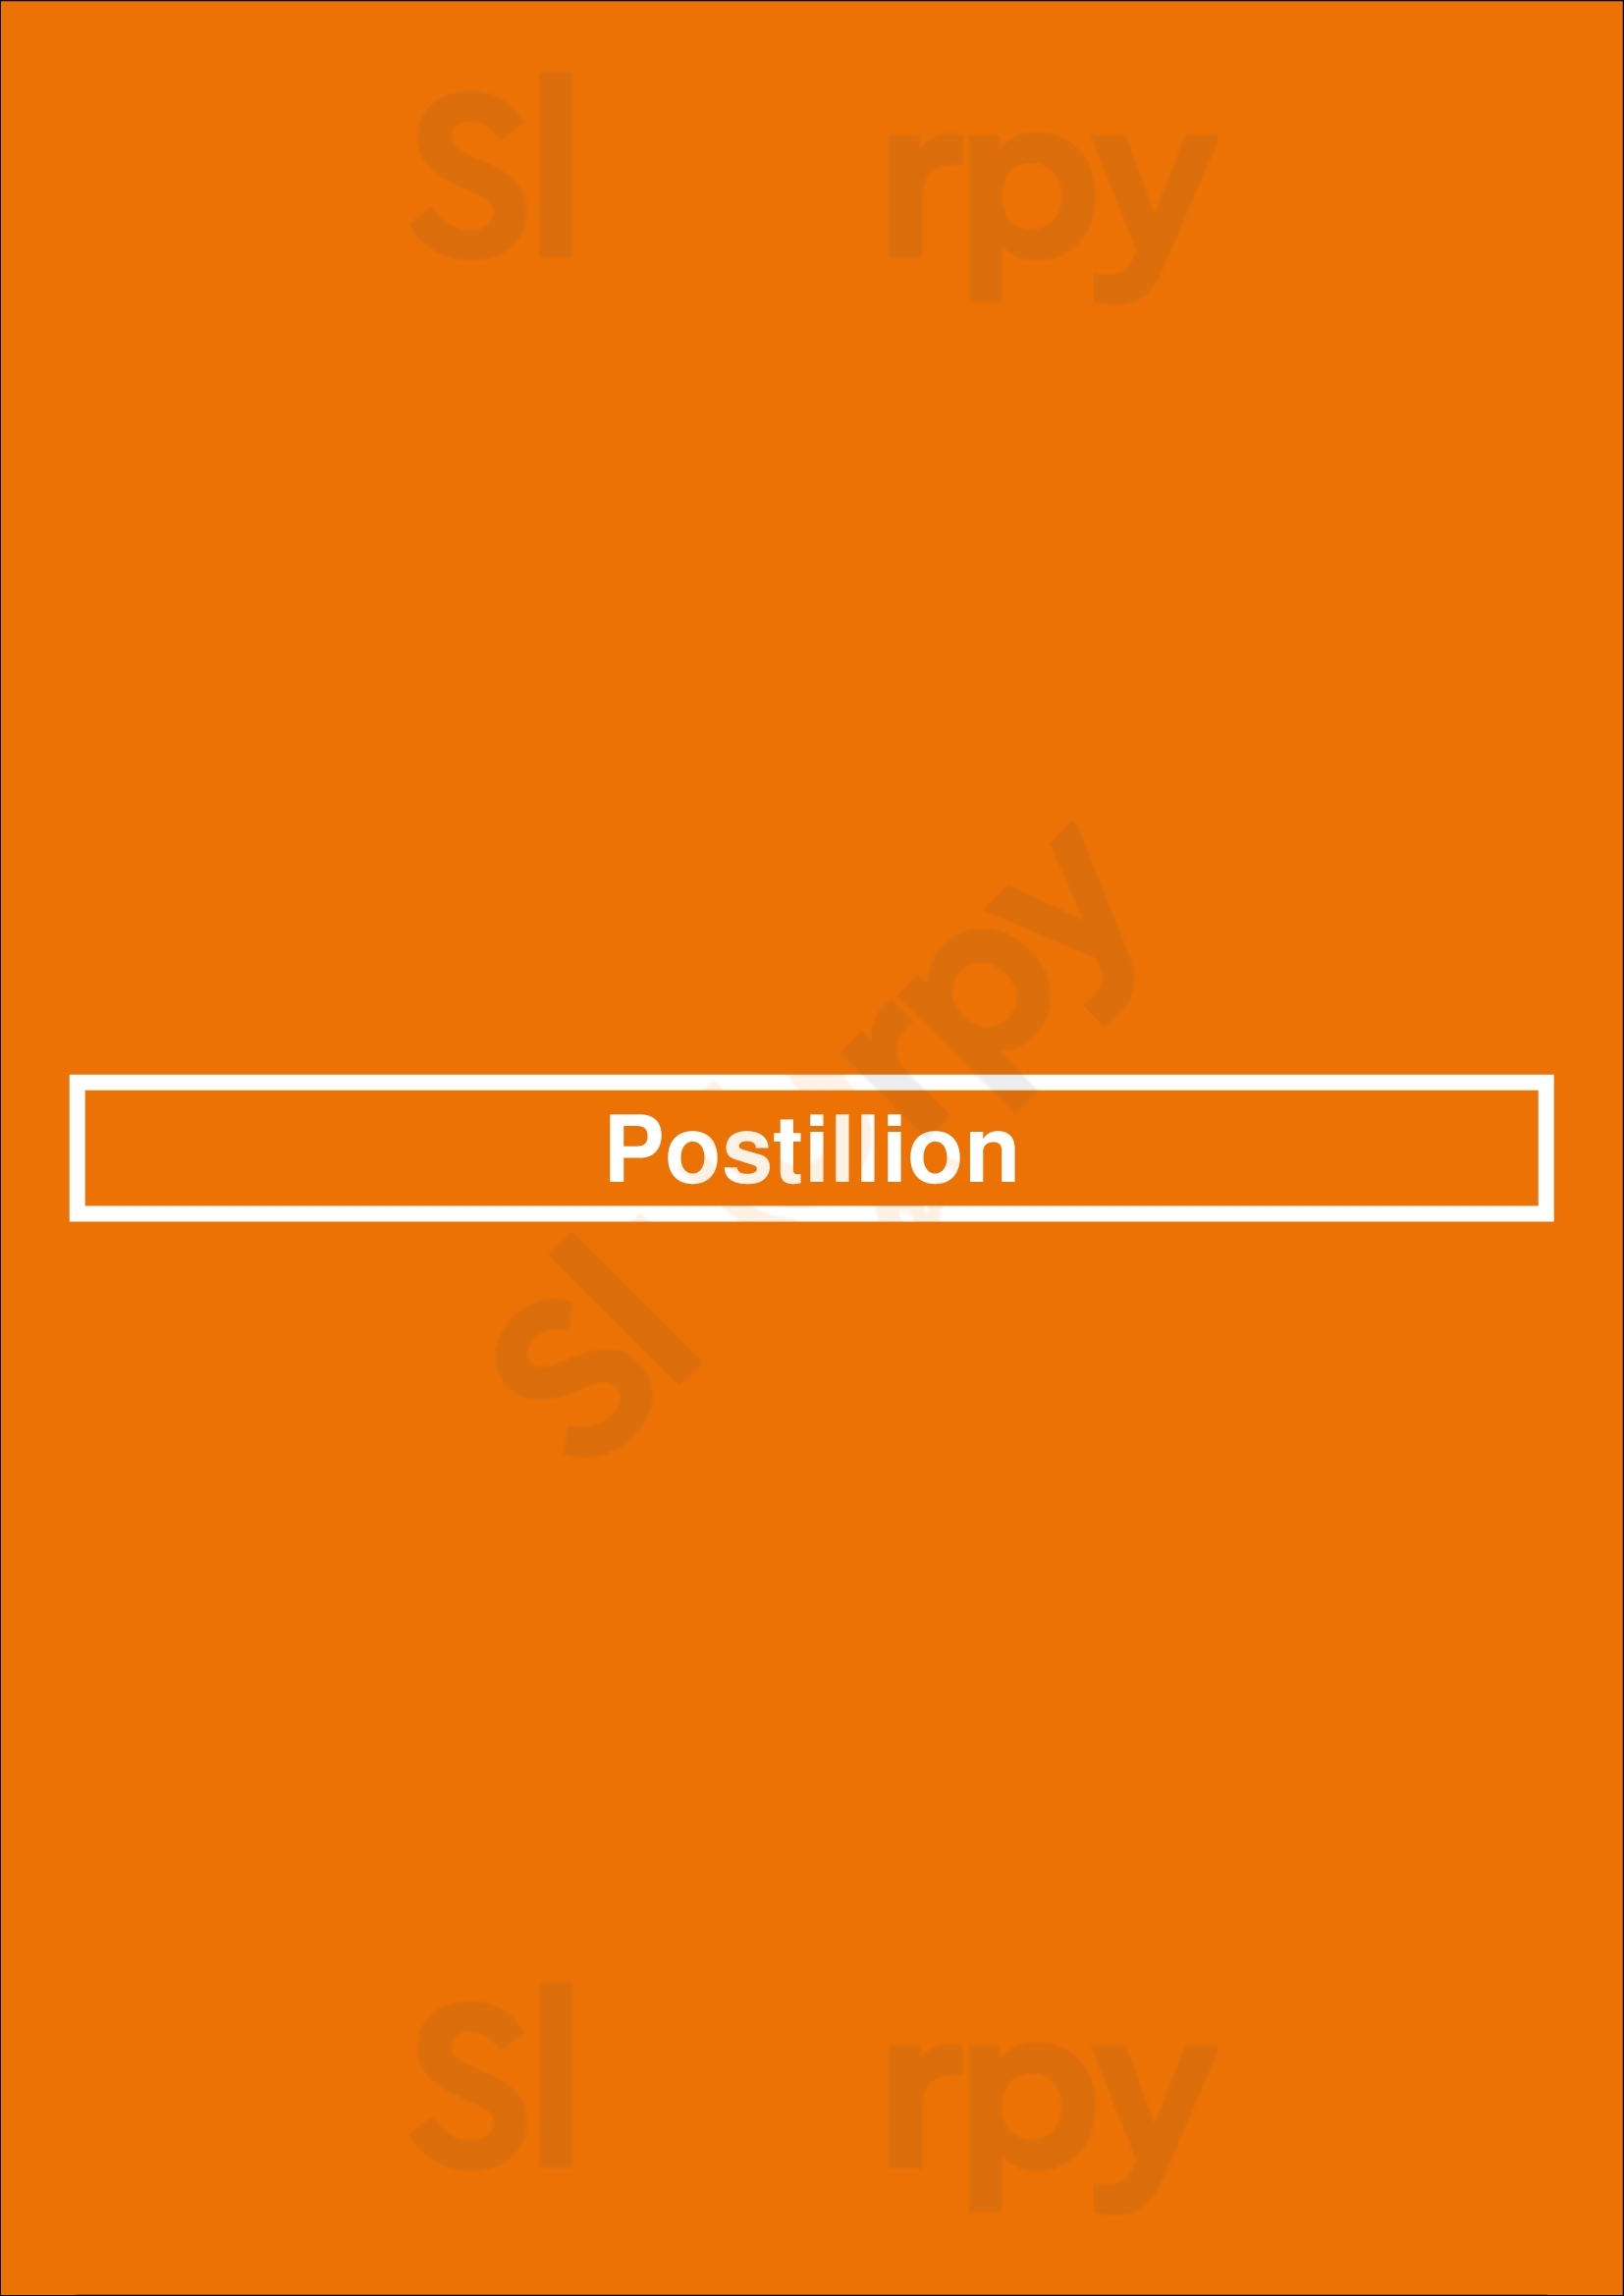 Postillion Rottach-Egern Menu - 1